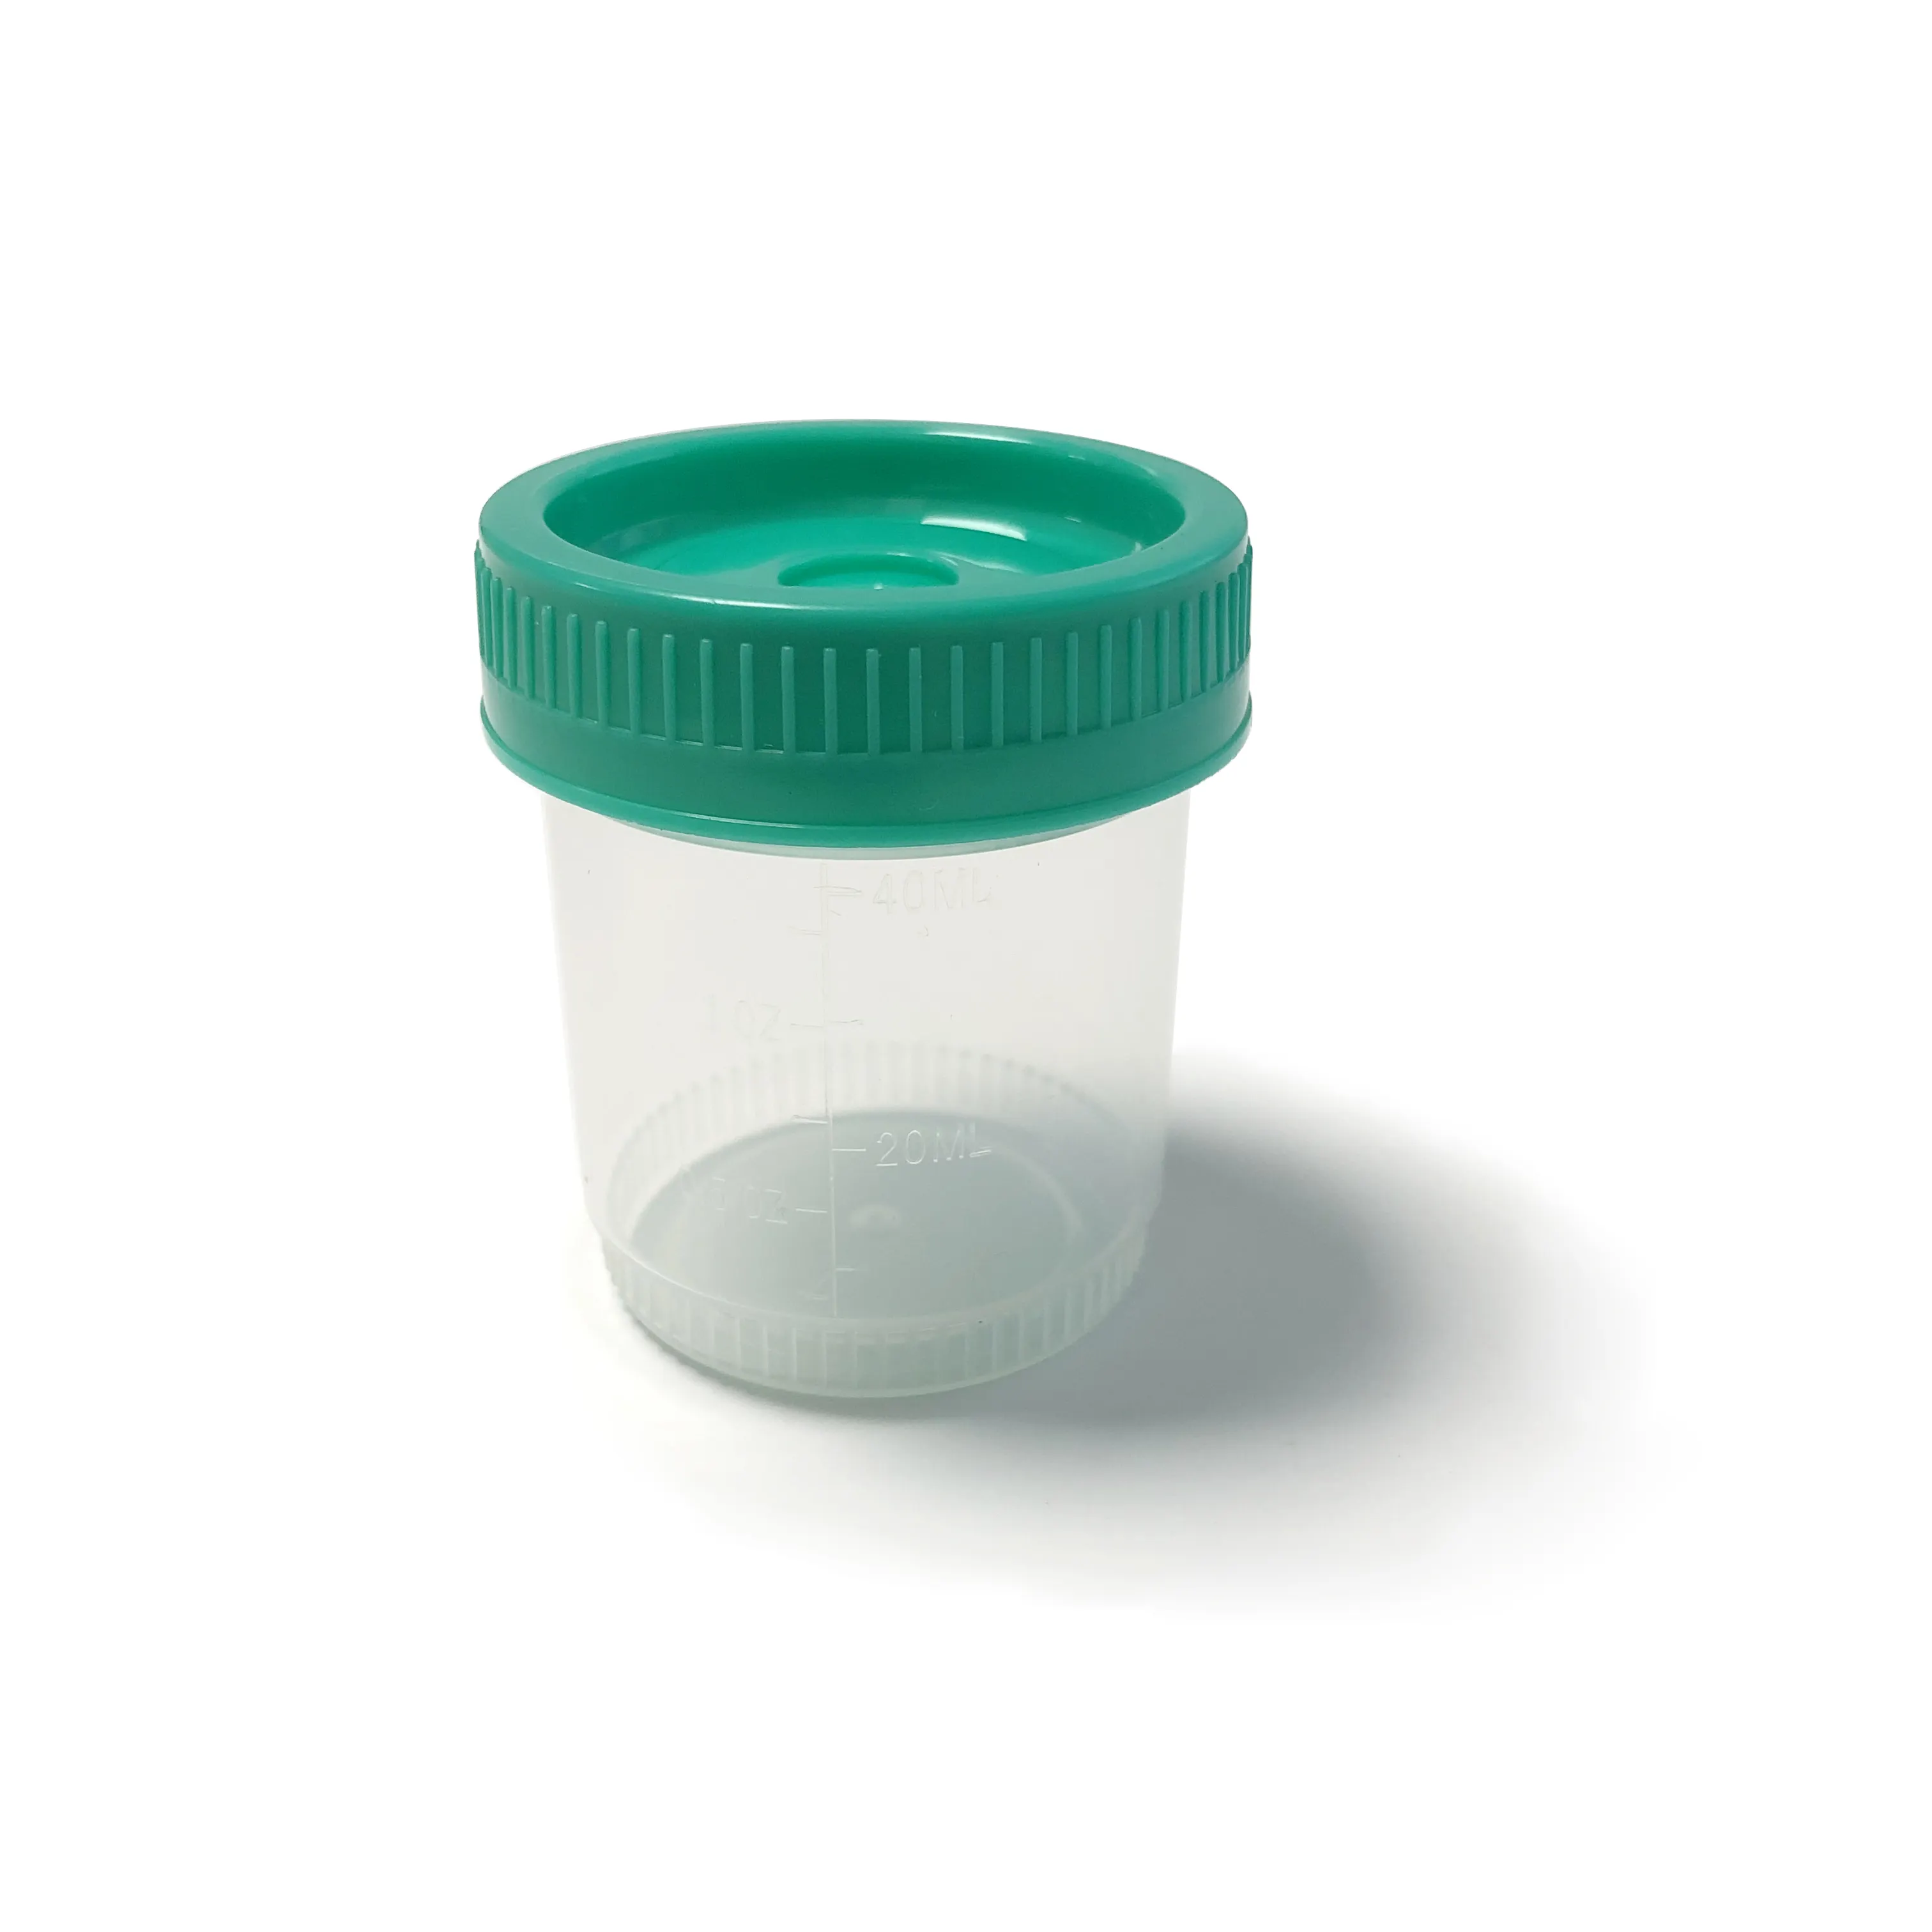 Tutup sekrup steril sekali pakai plastik 120ml cangkir spesimen urin dan bangku dengan tutup Ce Iso disetujui wadah urin